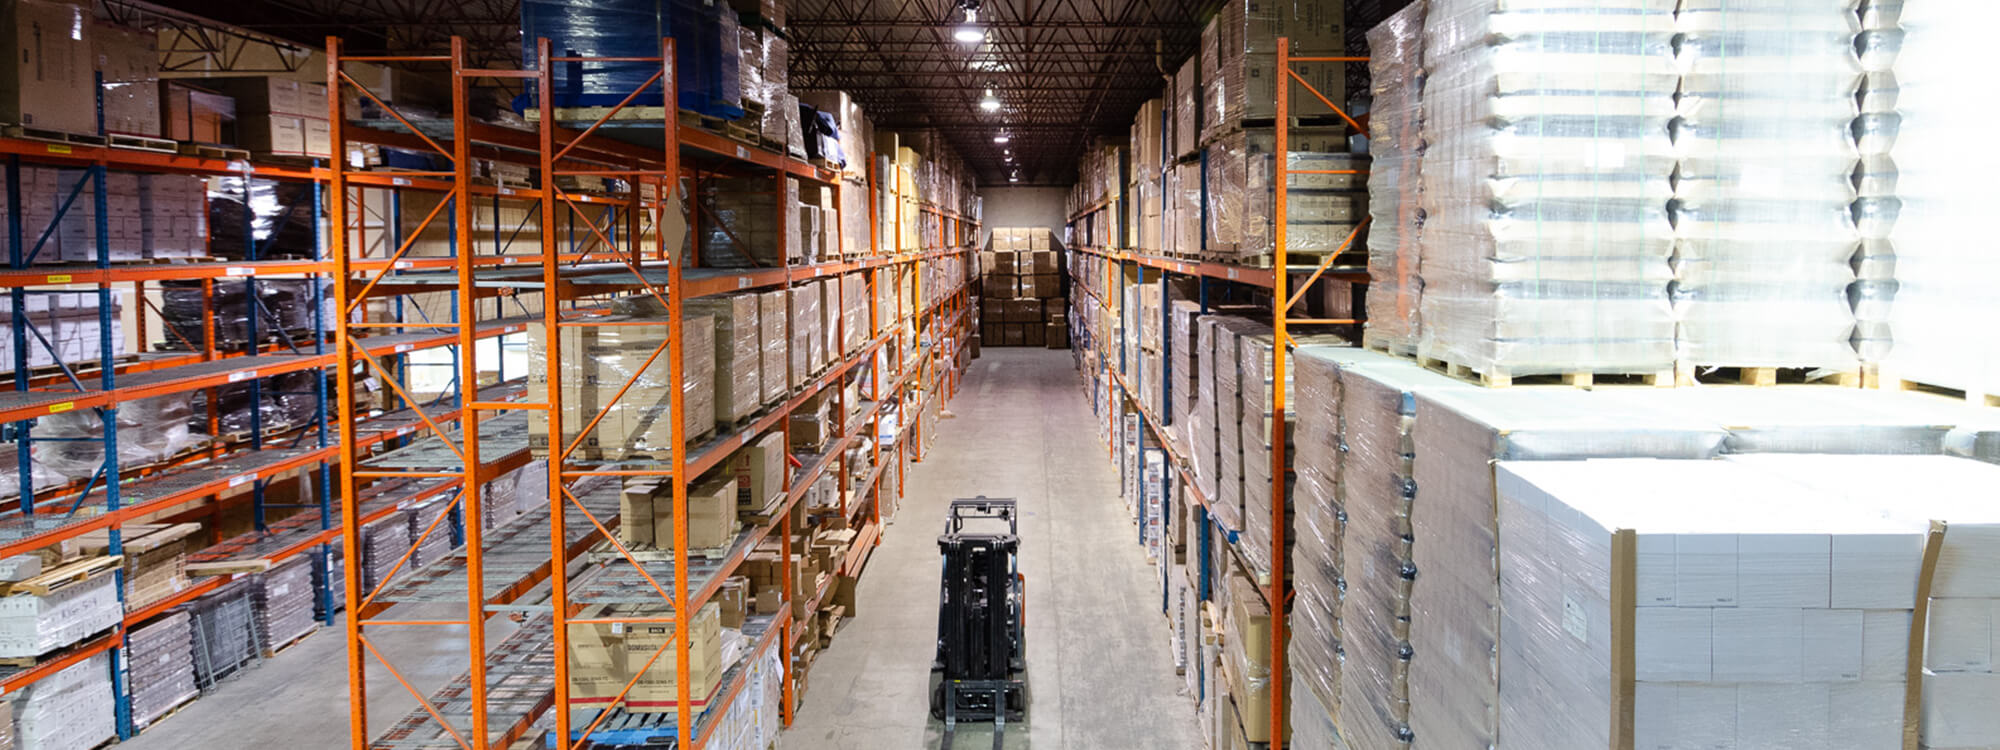 Why choose GPS Logistics & Warehouse?